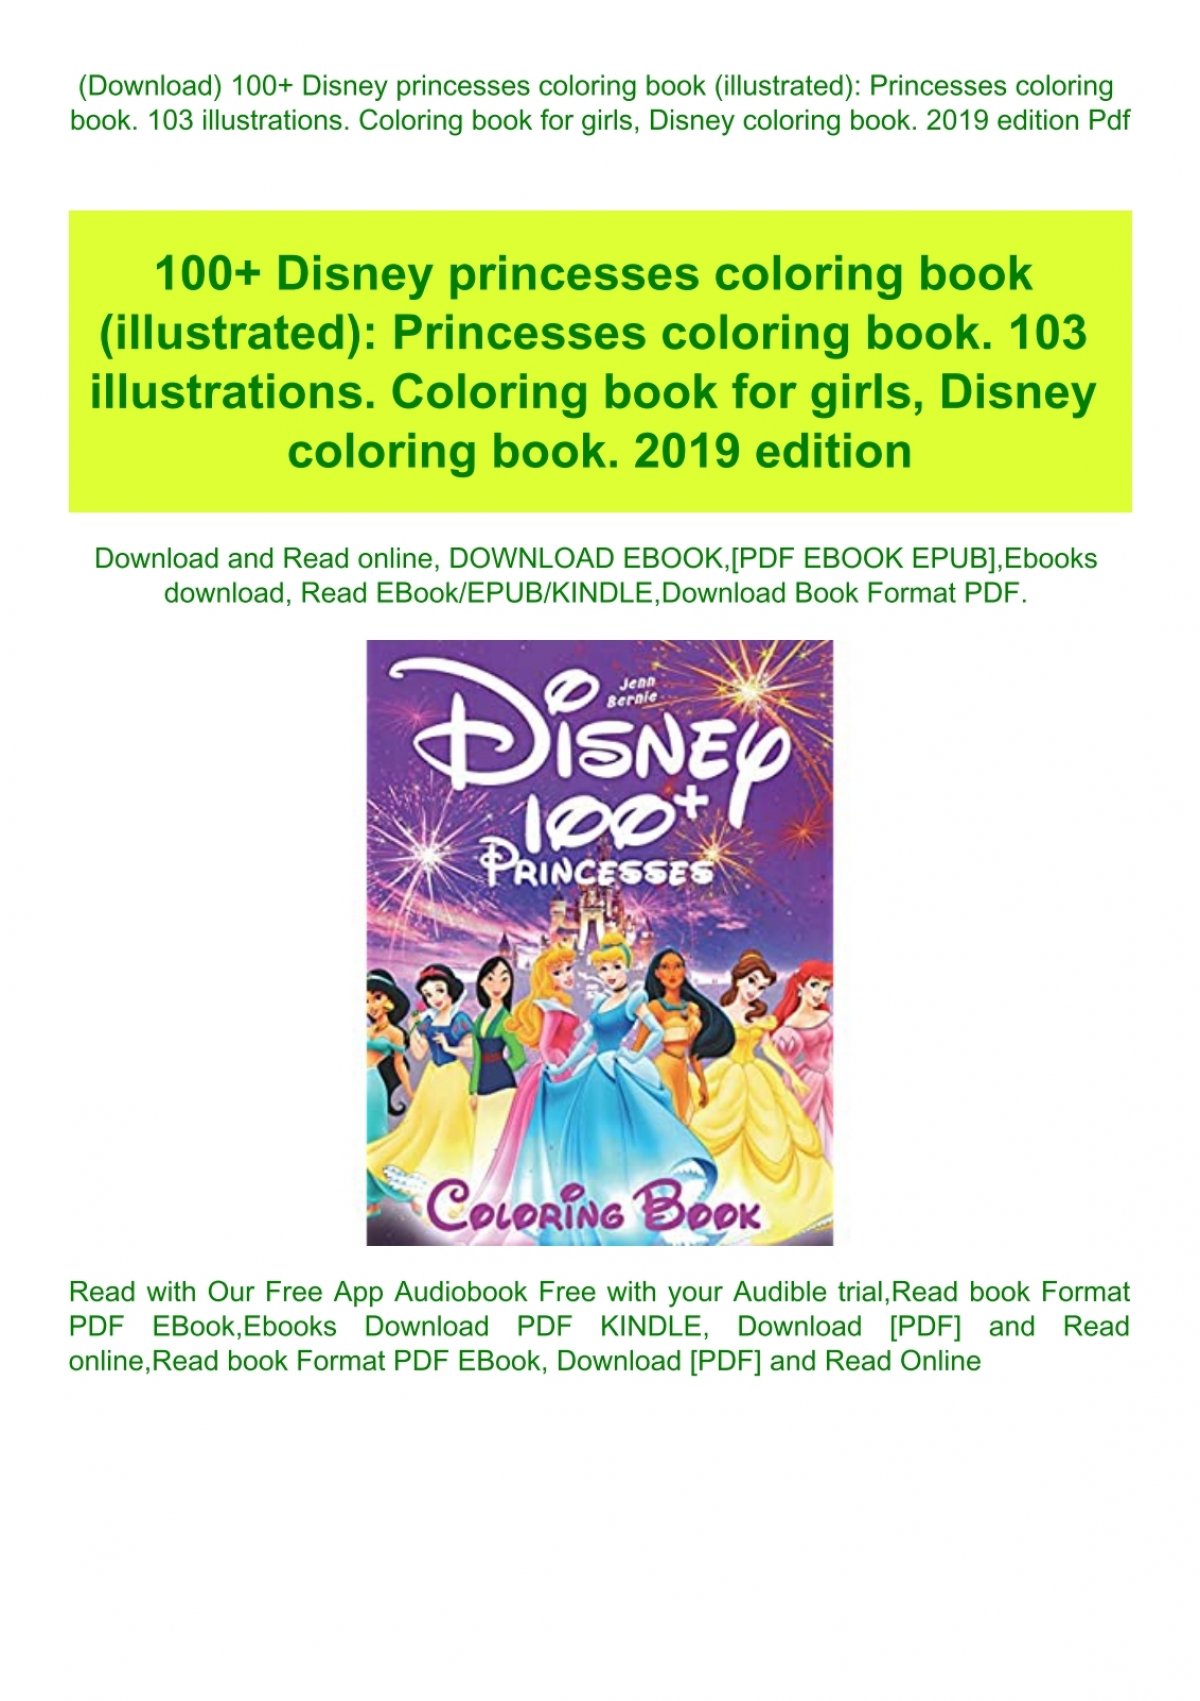 Download Download 100 Disney Princesses Coloring Book Illustrated Princesses Coloring Book 103 Illustrations Coloring Book For Girls Disney Coloring Book 2019 Edition Pdf